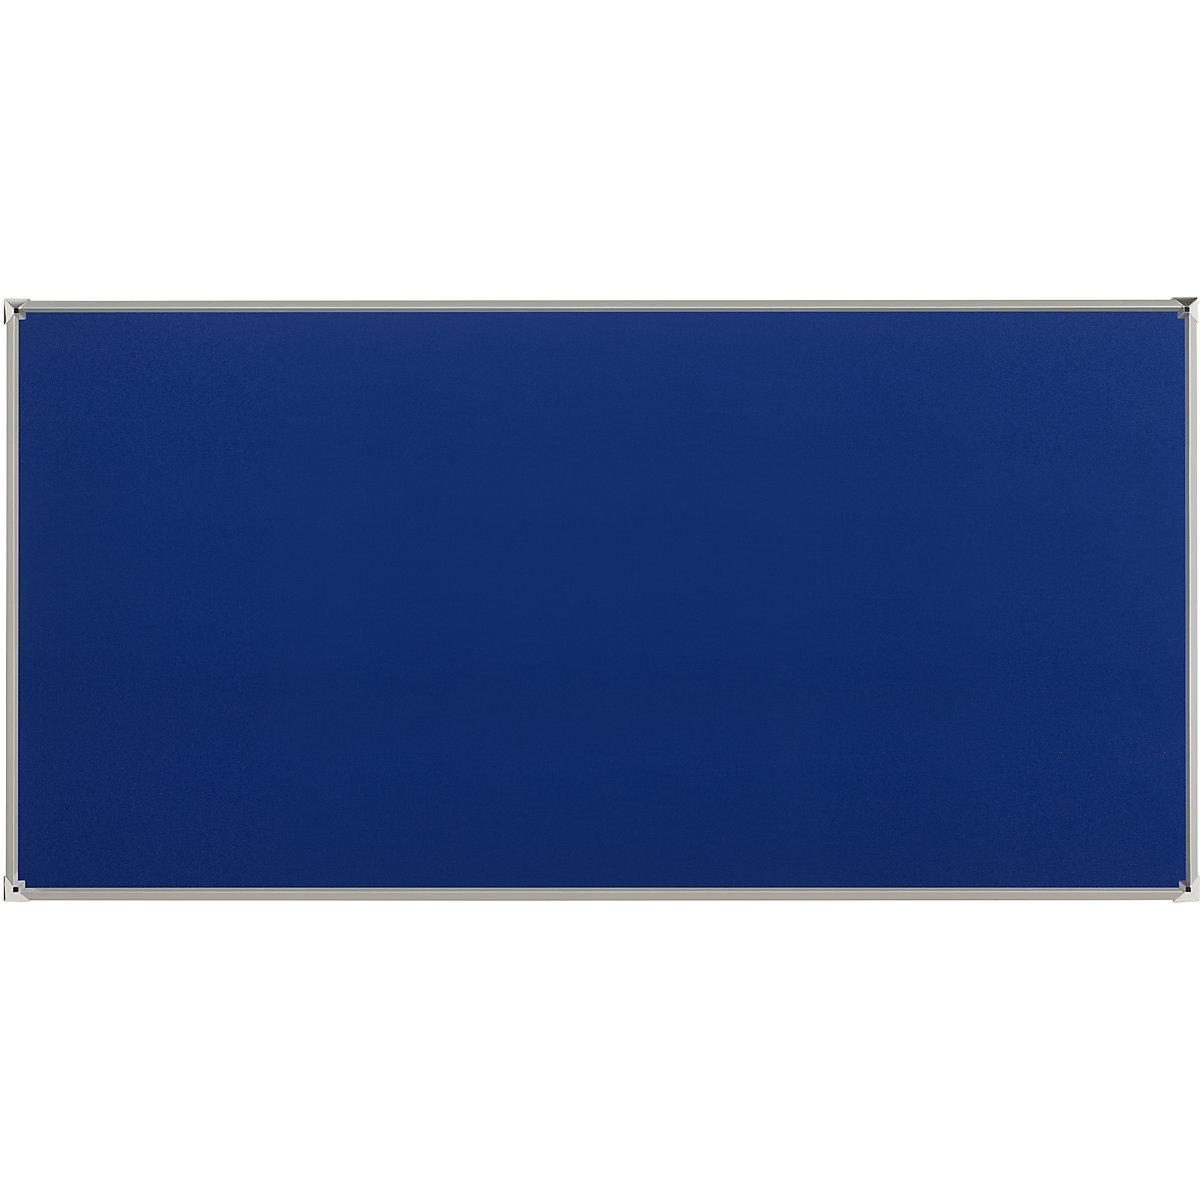 EUROKRAFTpro Pinnwand mit Alu-Rahmen, Stoffbezug, blau, BxH 2400 x 1200 mm